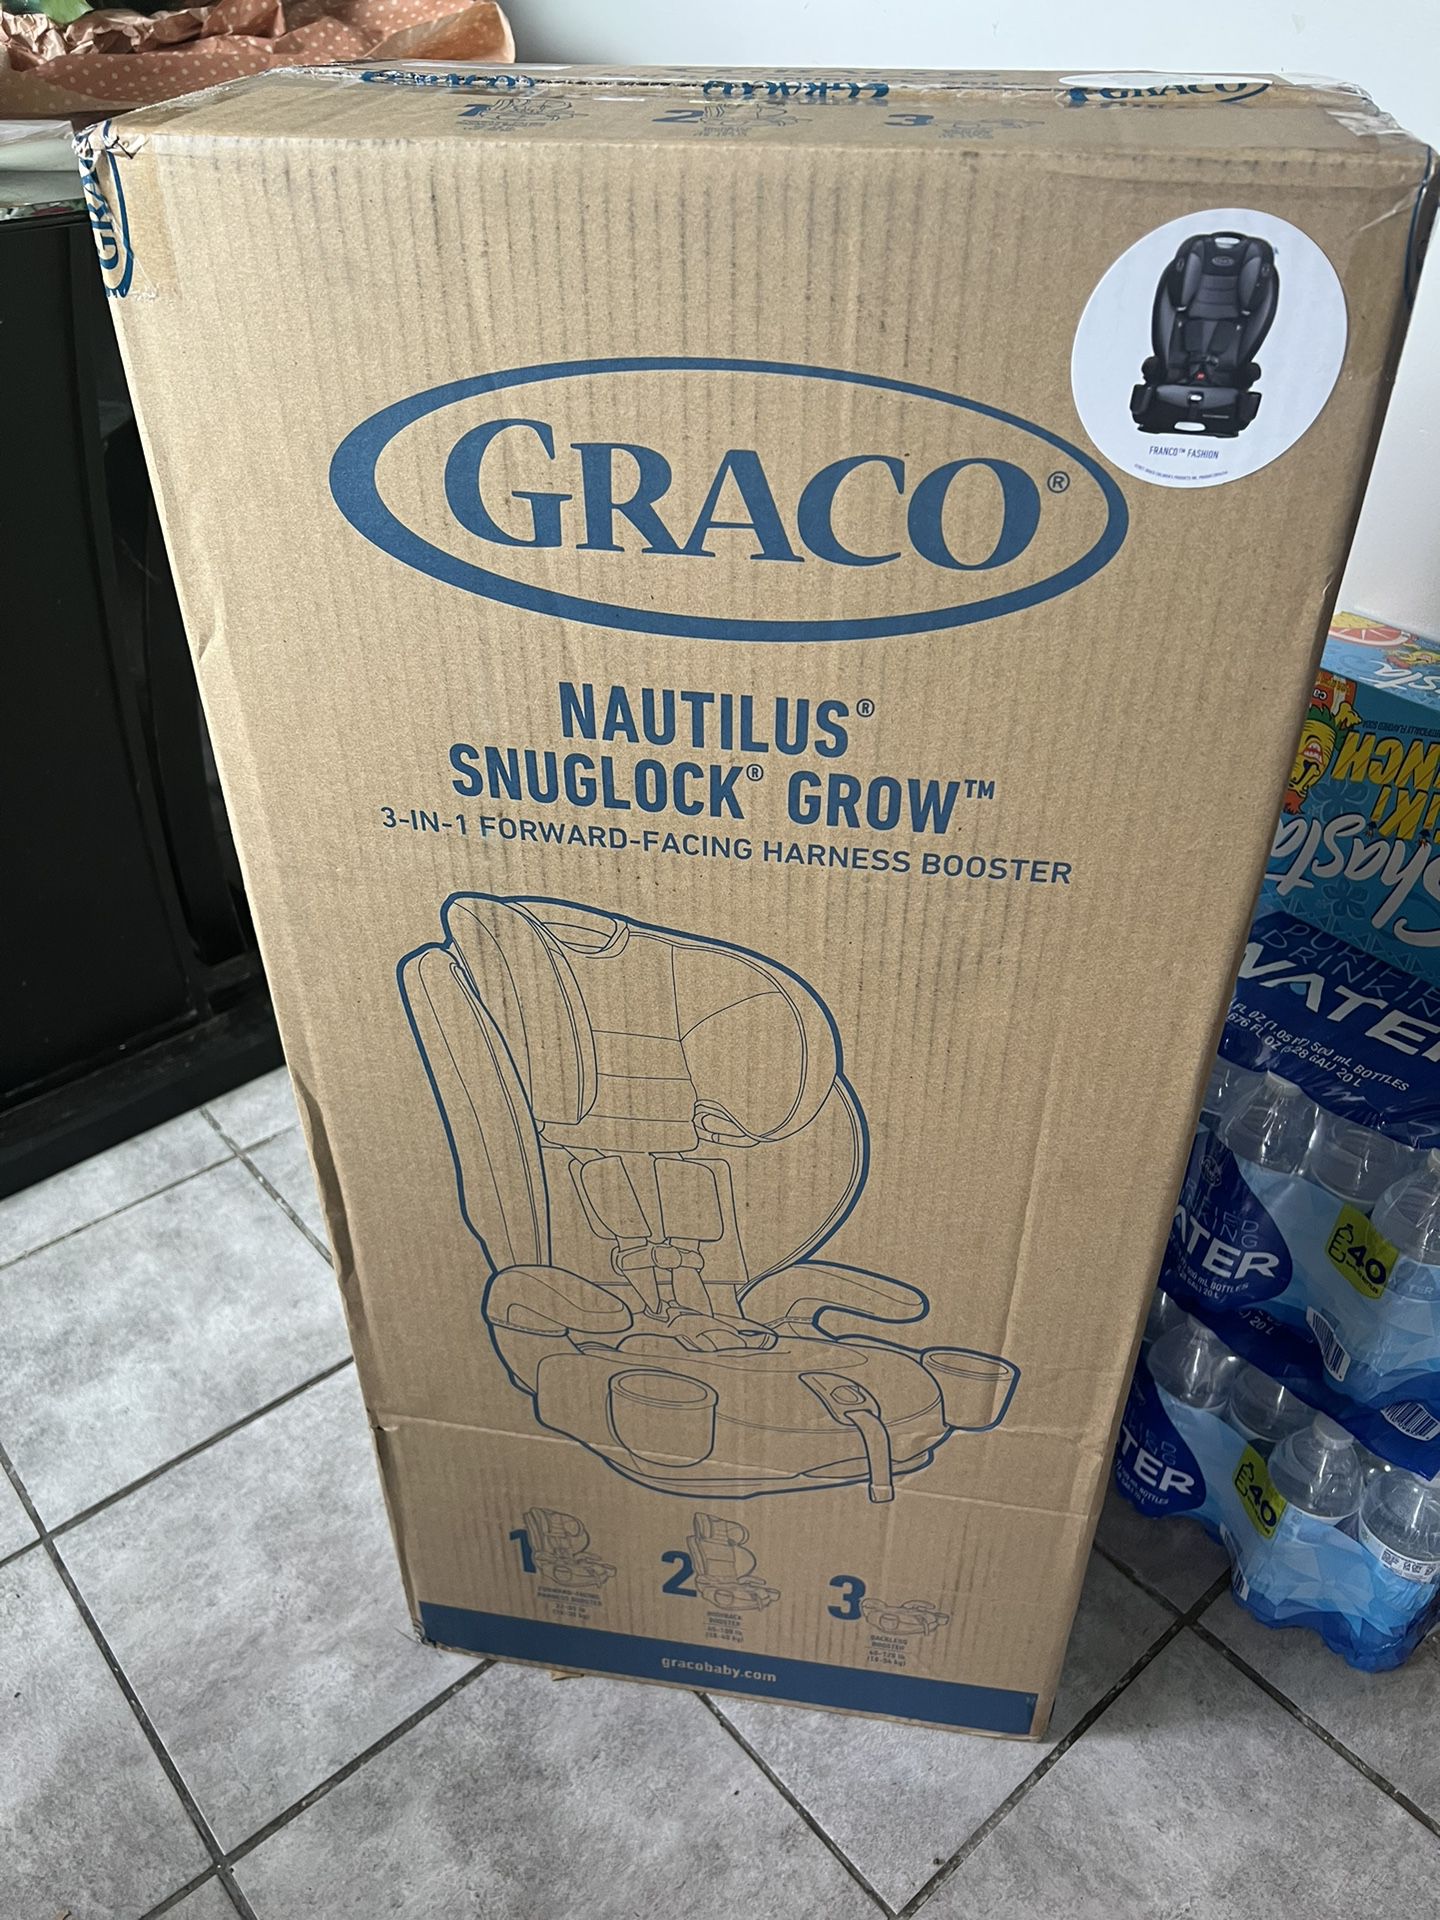 New Graco Car Seat 